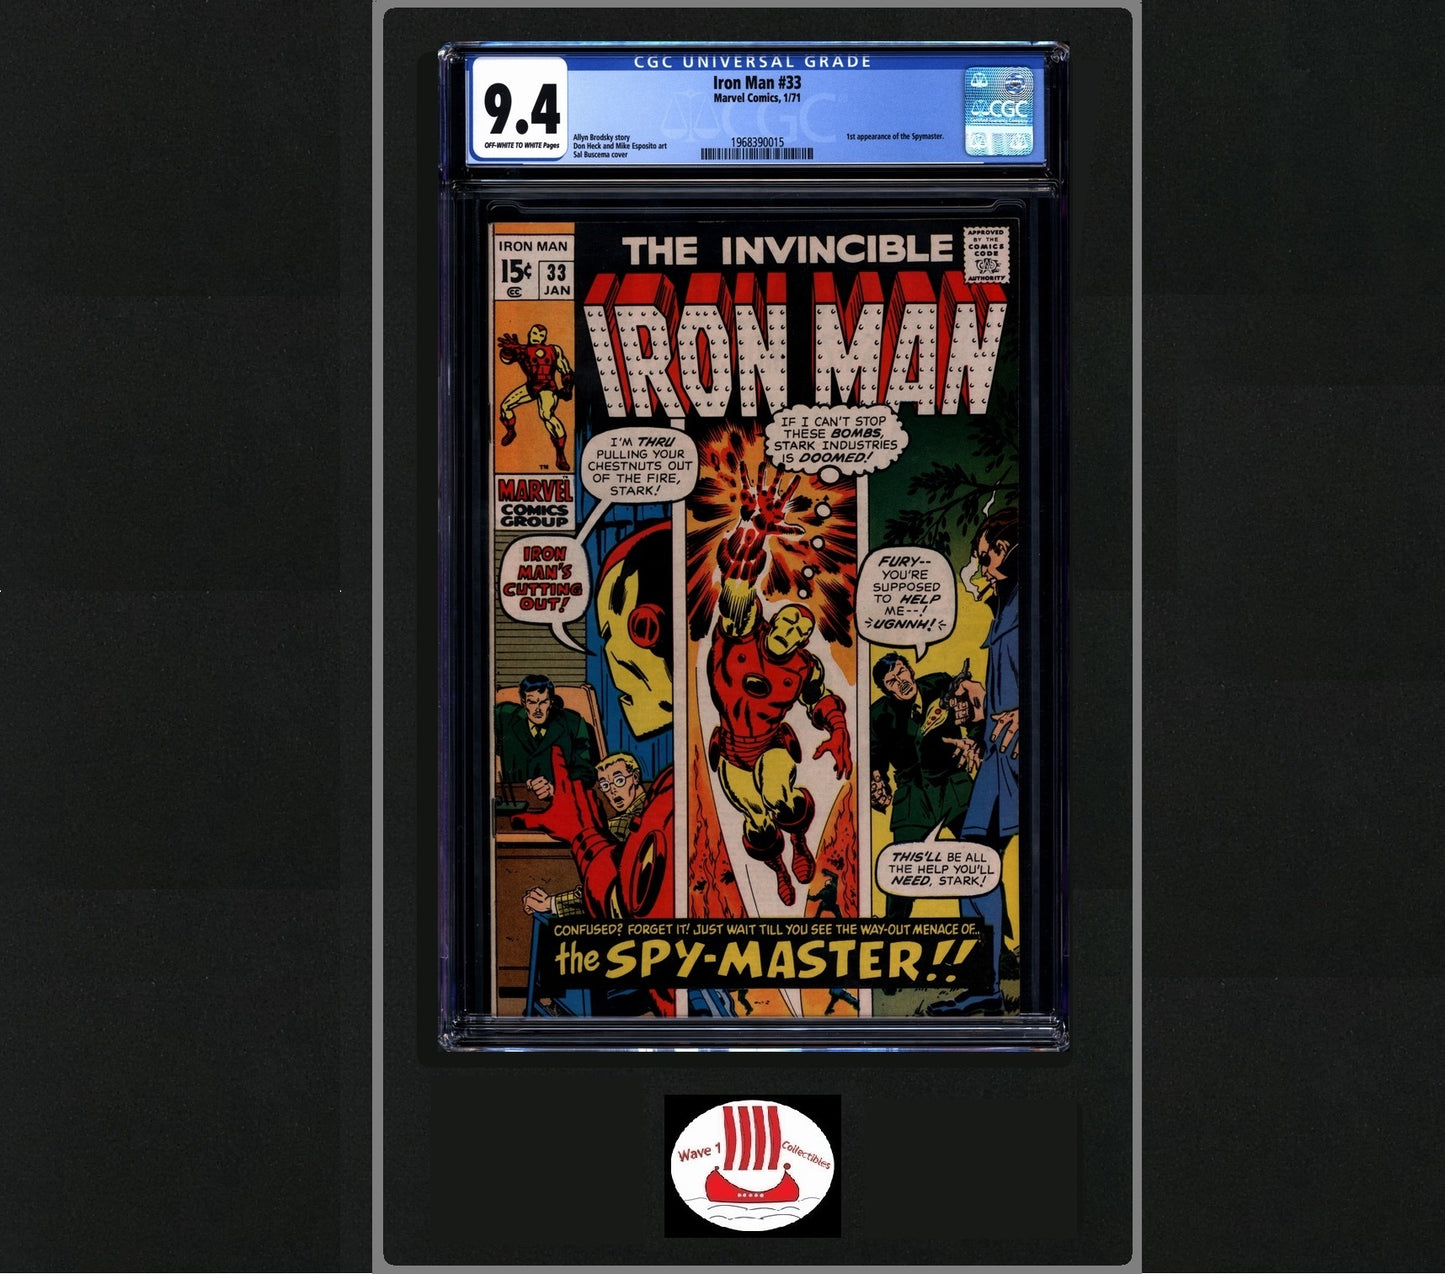 Iron Man vol 1 #33 CGC 9.4 | Marvel Comics 1st appearance of Spymaster